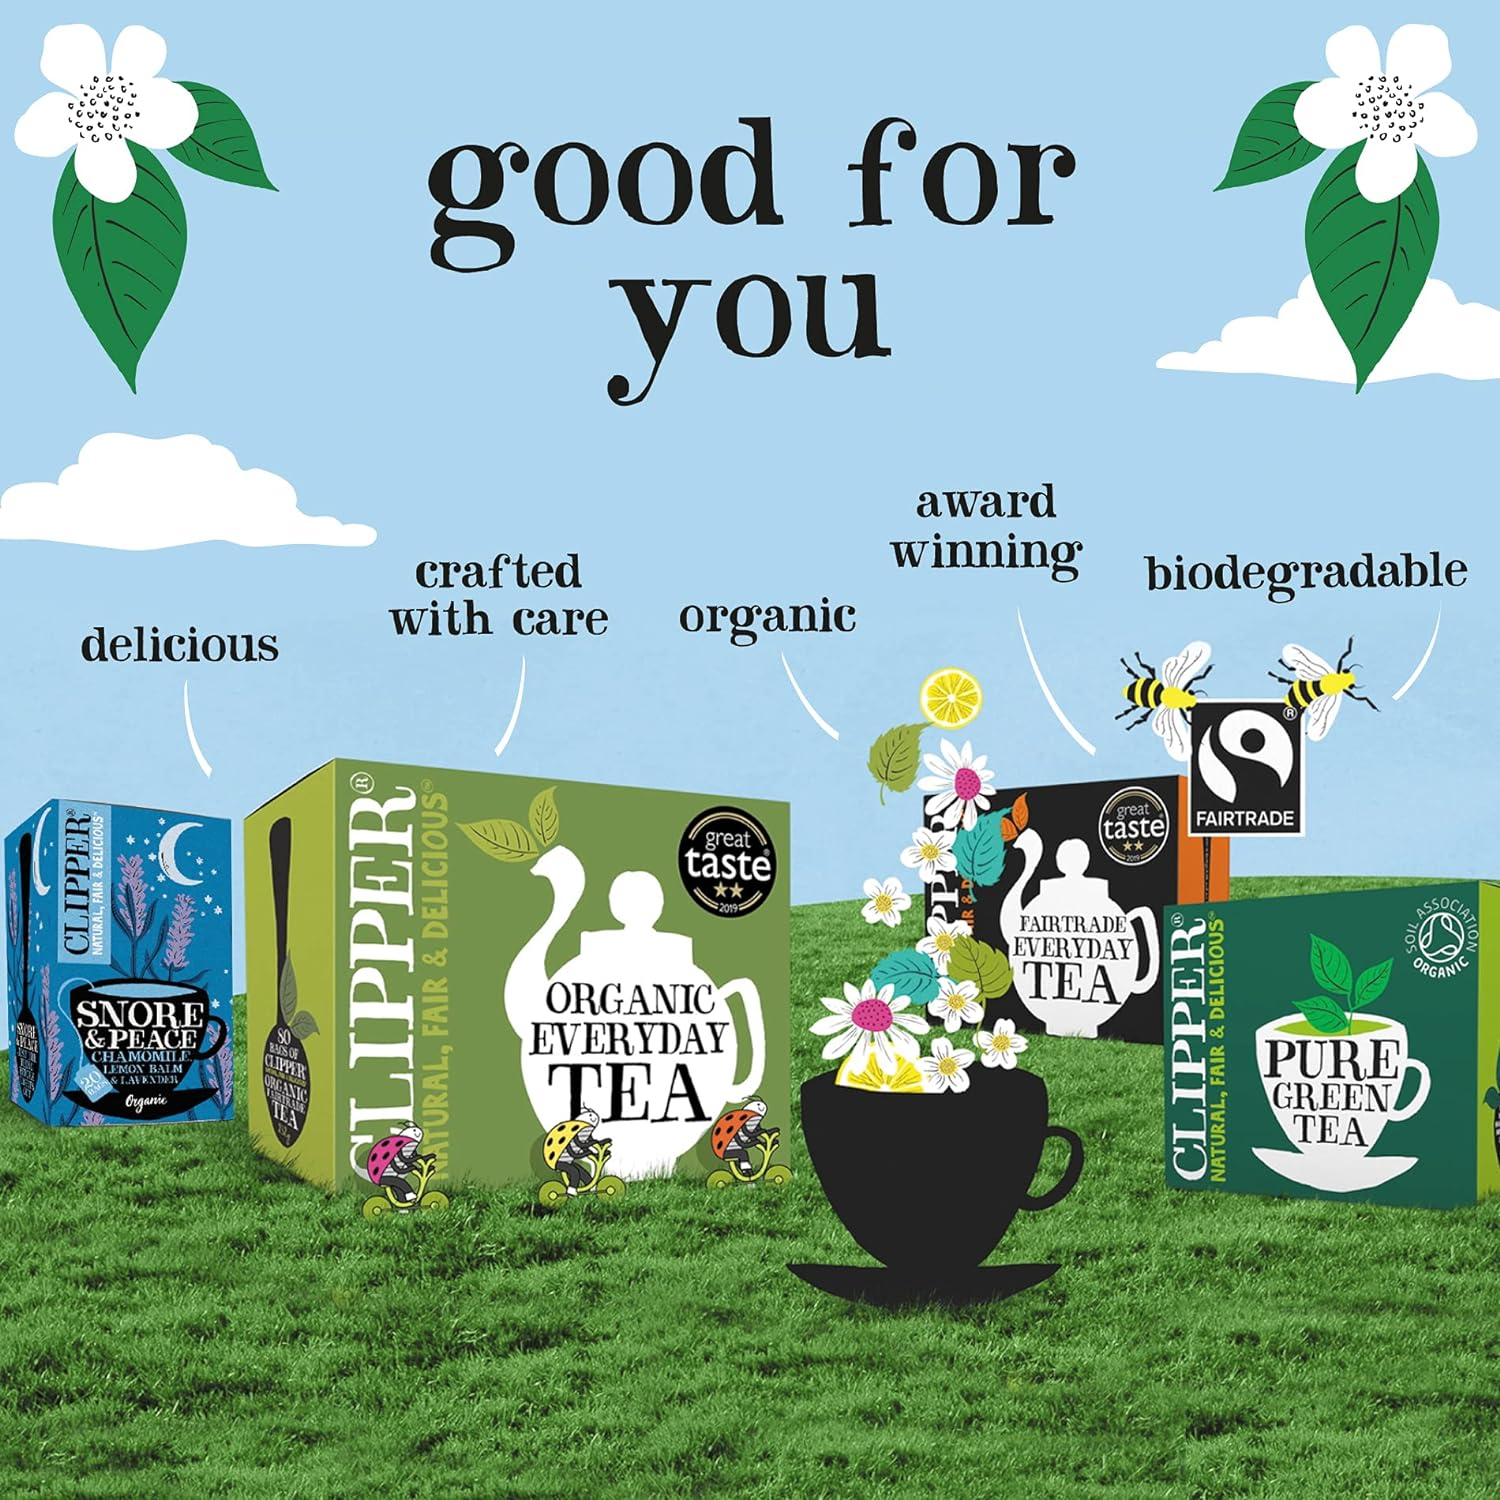 Organic Fairtrade Decaf Green Tea 40 bags